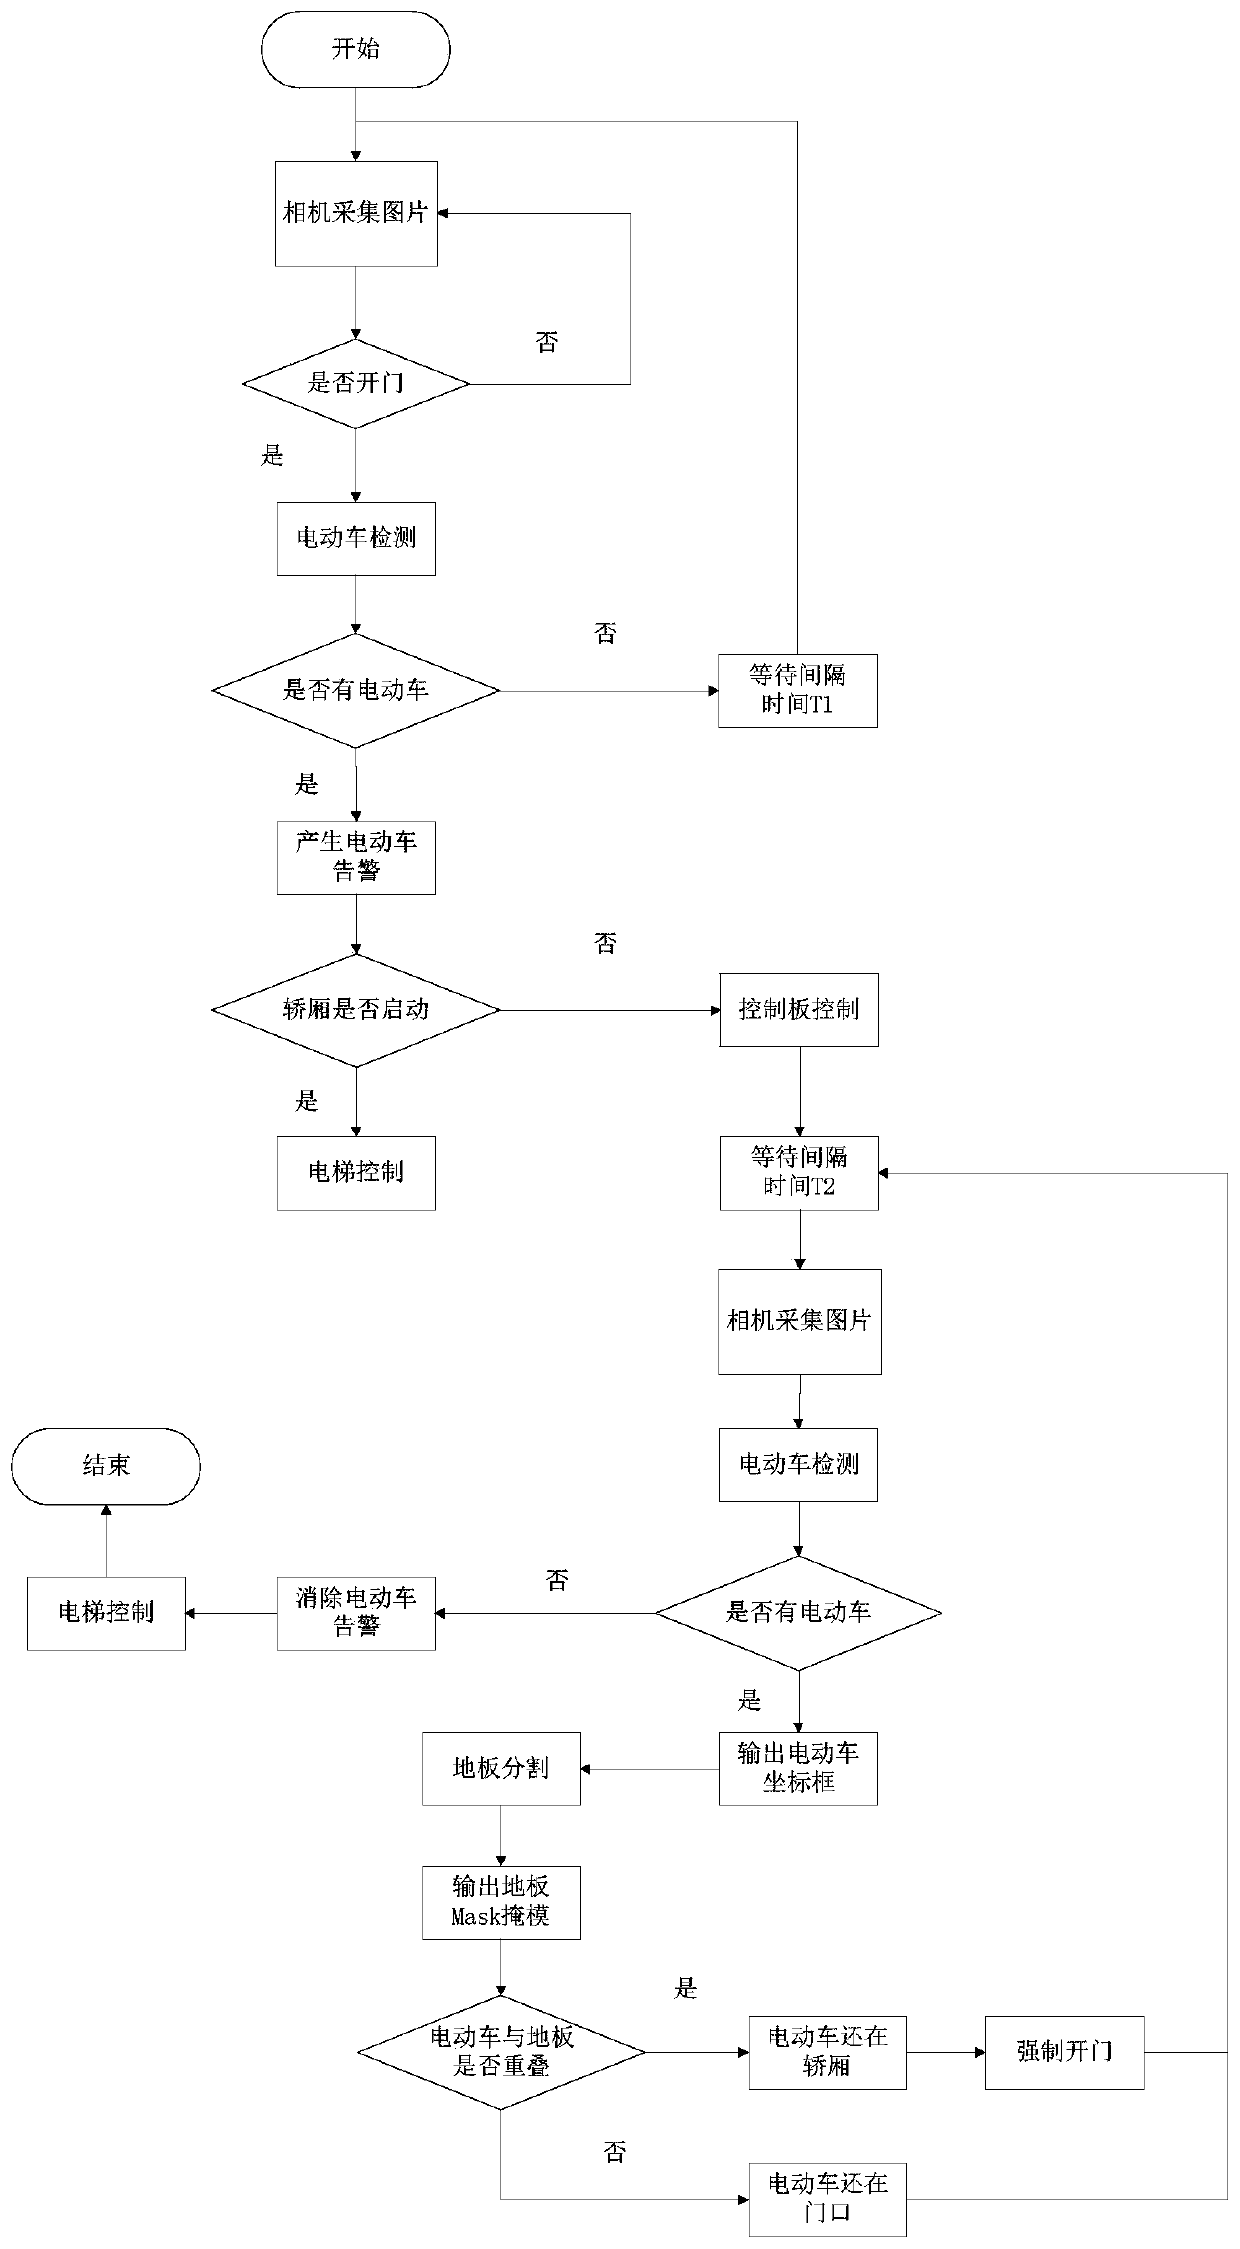 Linked elevator control method for preventing elevator entering and ascending of electric vehicle based on semantic segmentatio